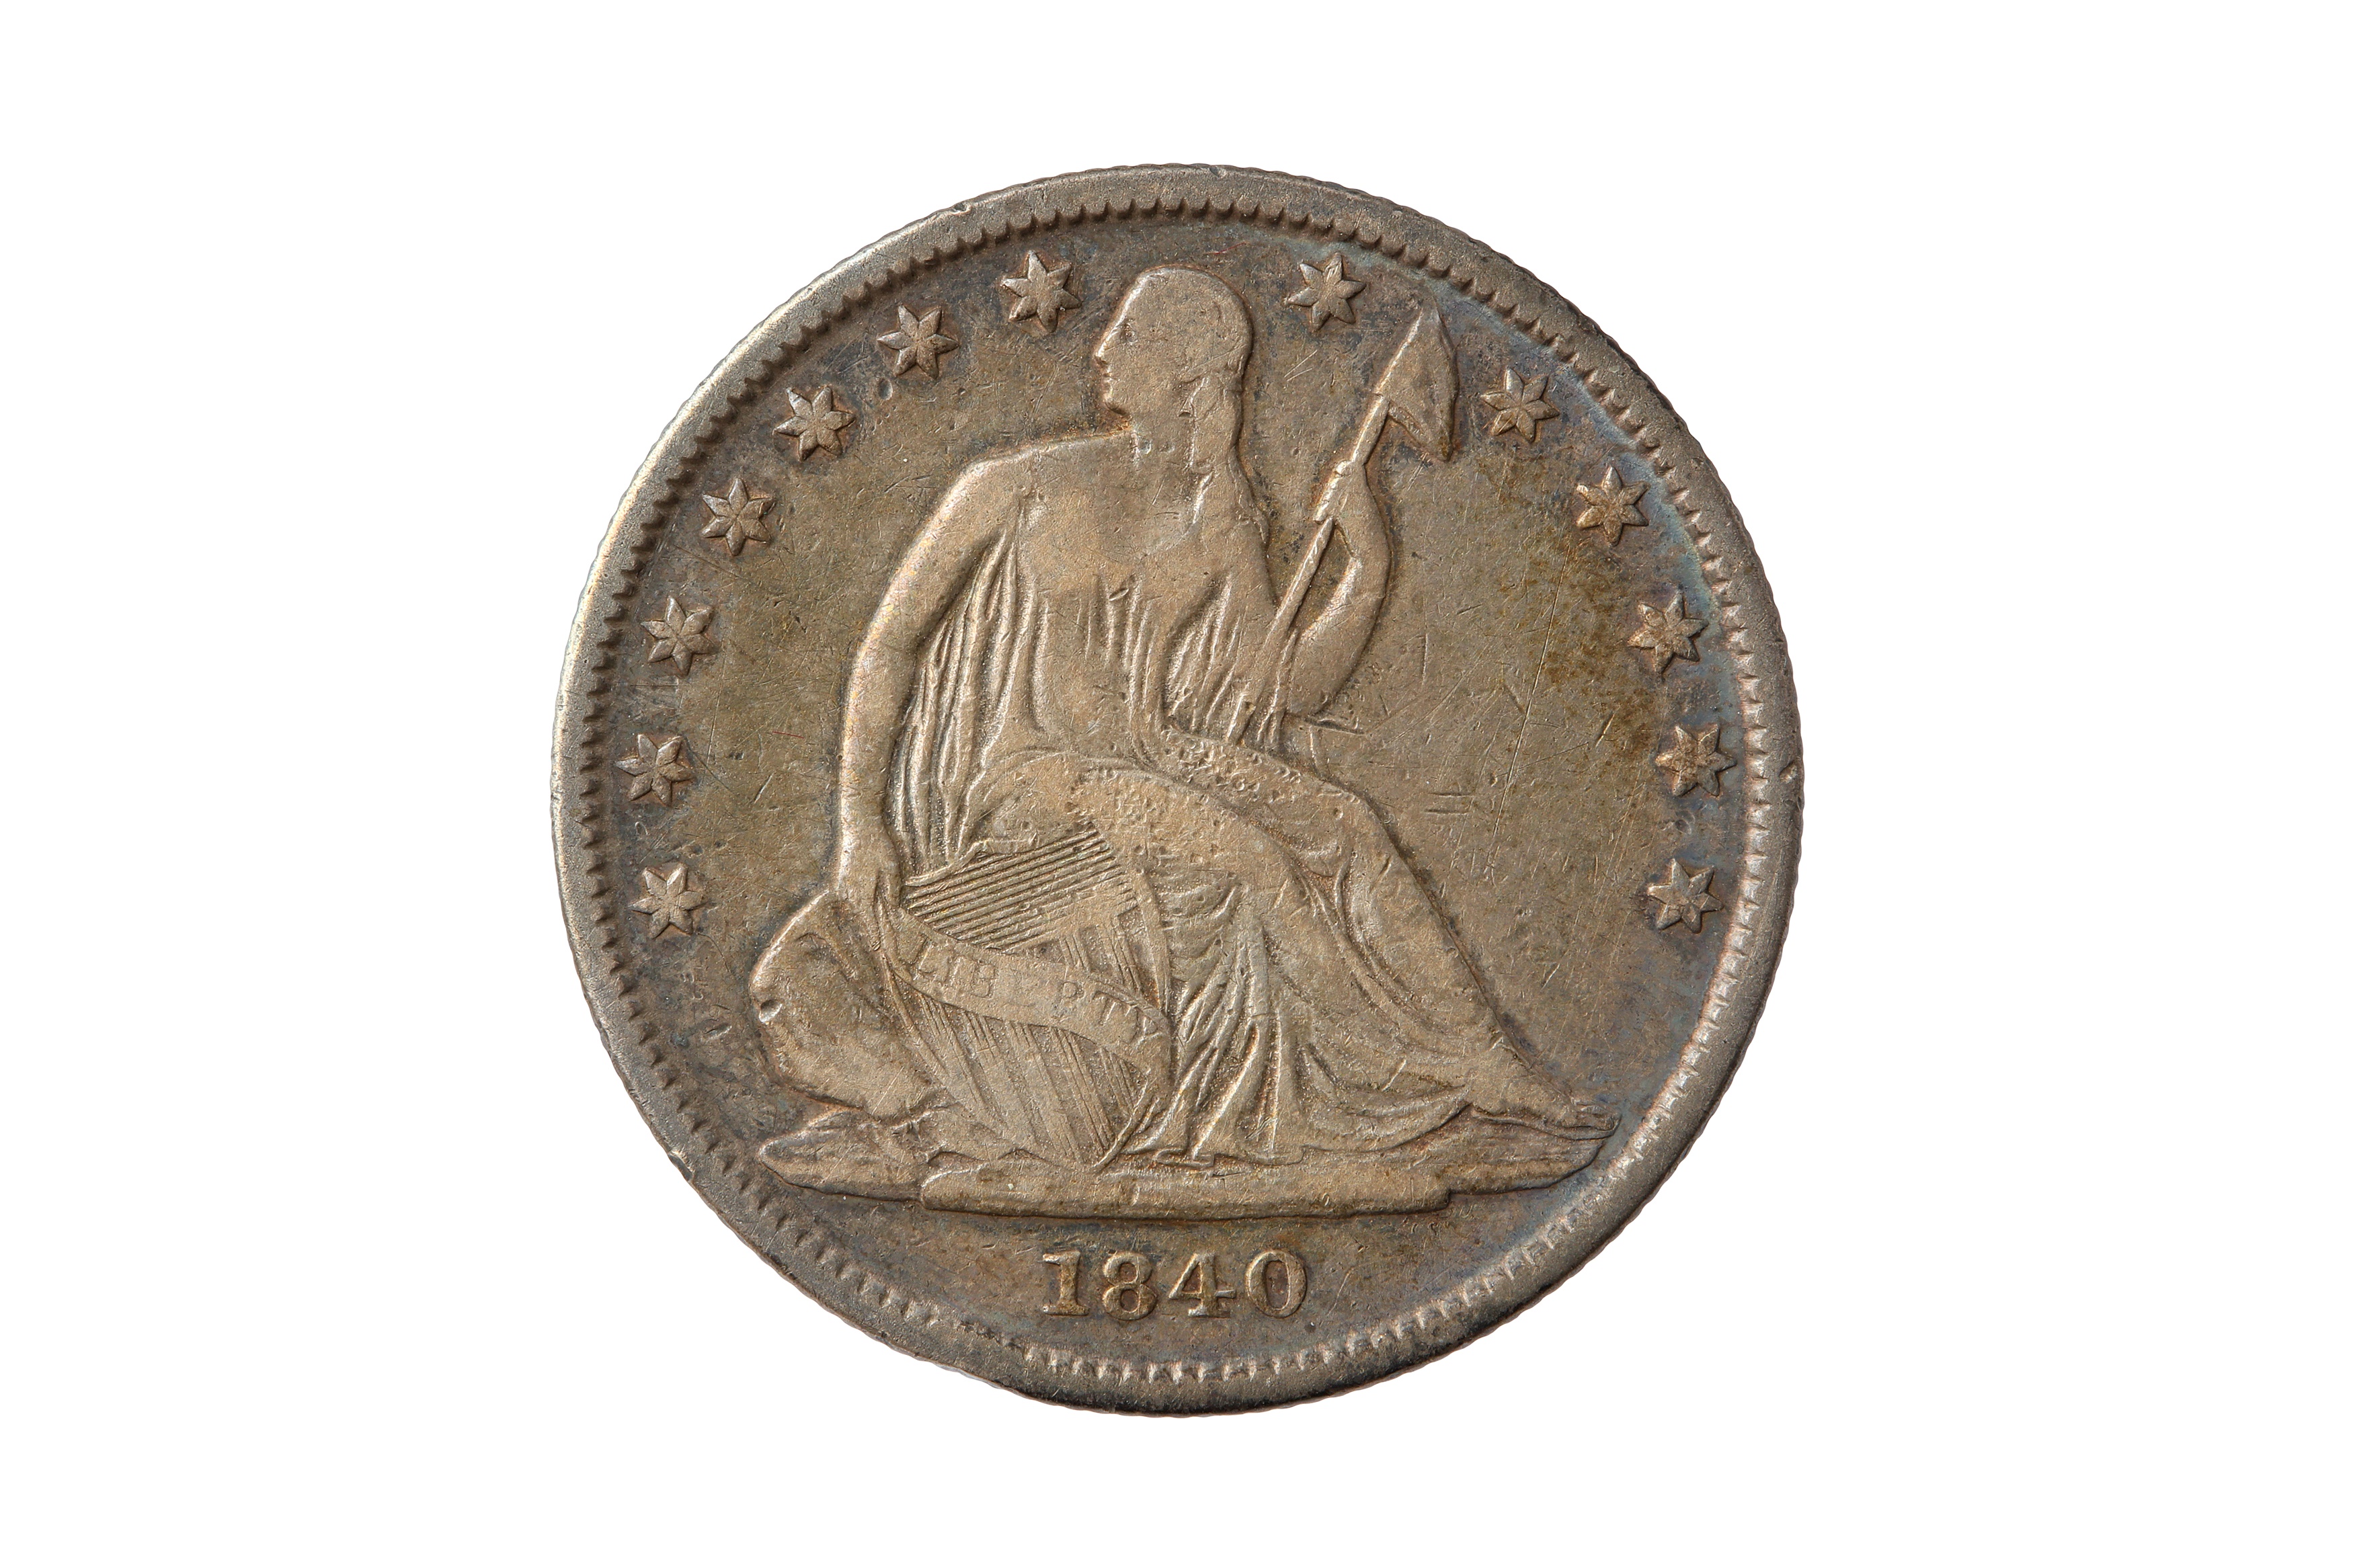 USA, 1840 50 CENTS/HALF DOLLAR.